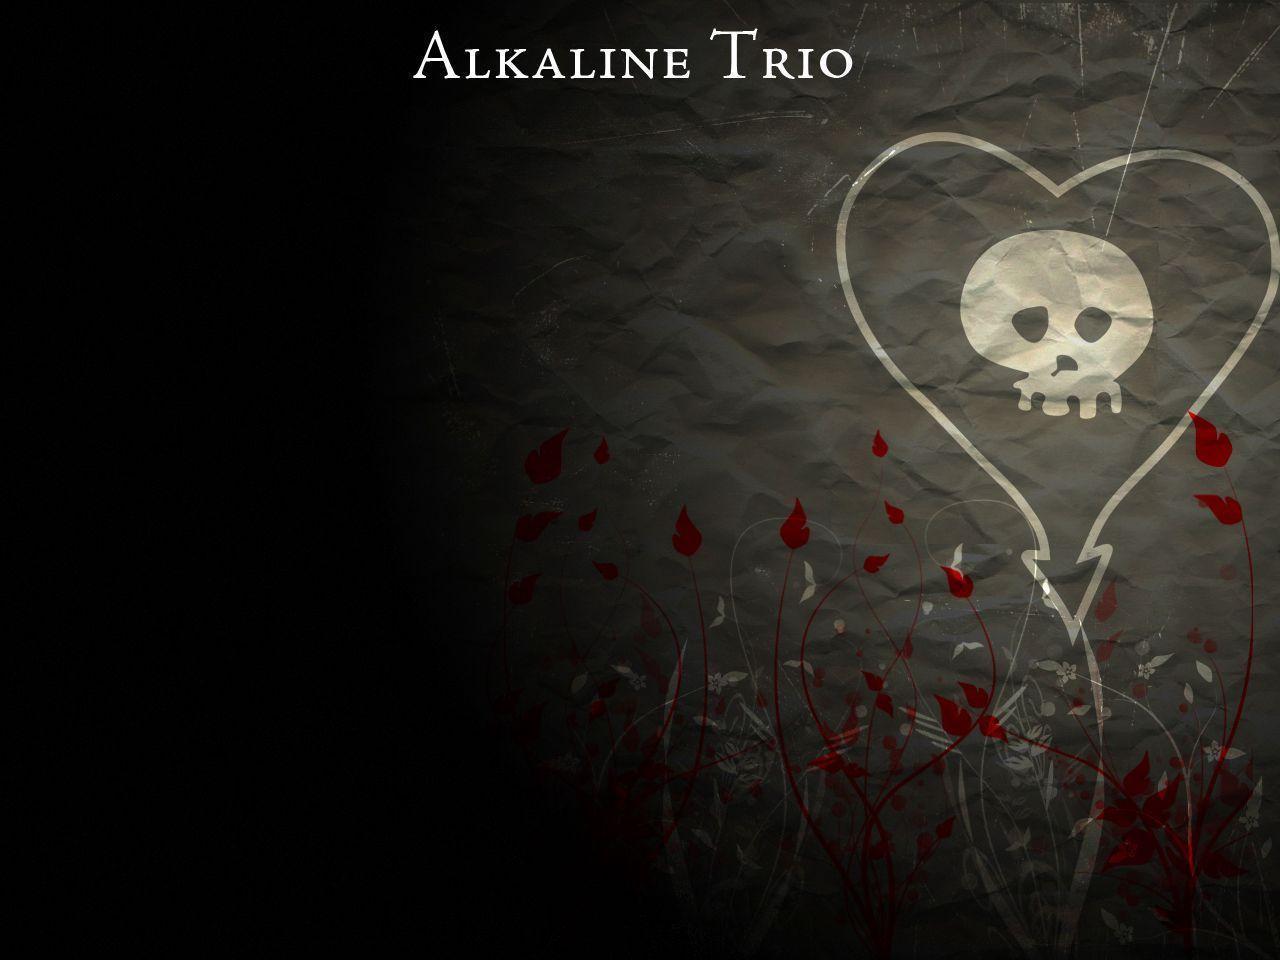 Gallery For > Alkaline Trio Wallpaper